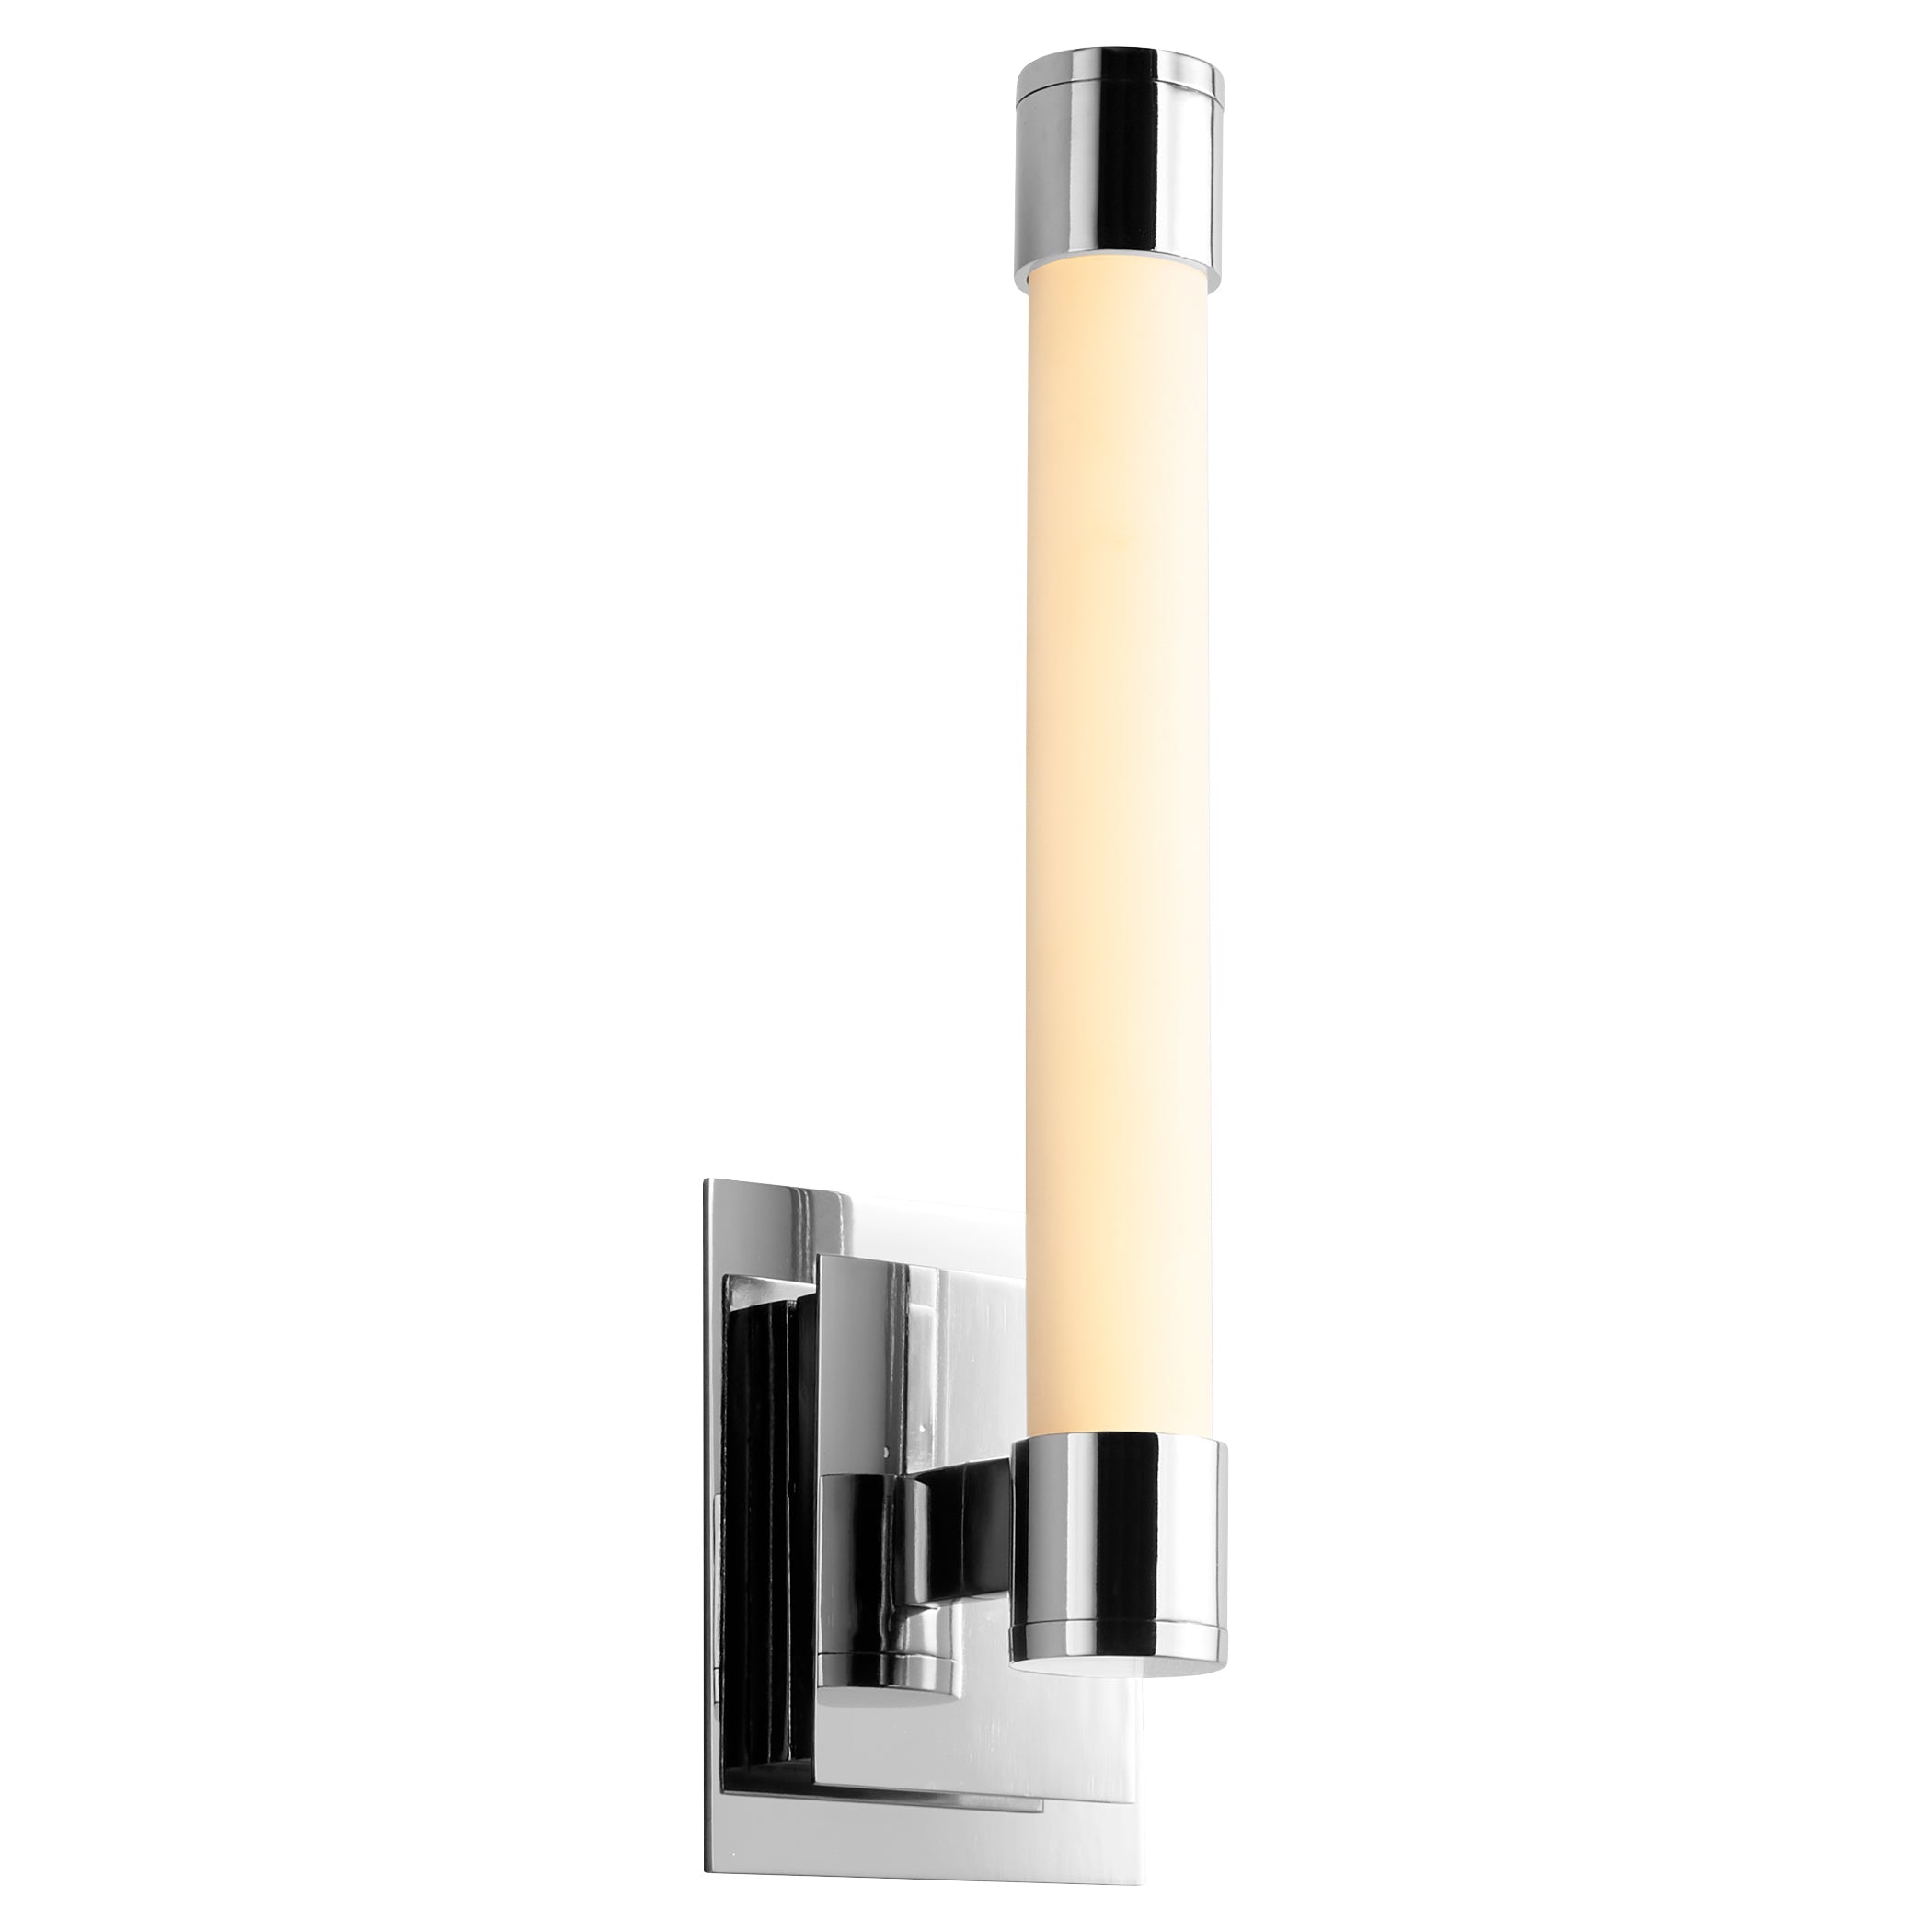 Oxygen ZENITH 3-556-14 Bath Vanity Wall Sconce Light Fixture - Polished Chrome